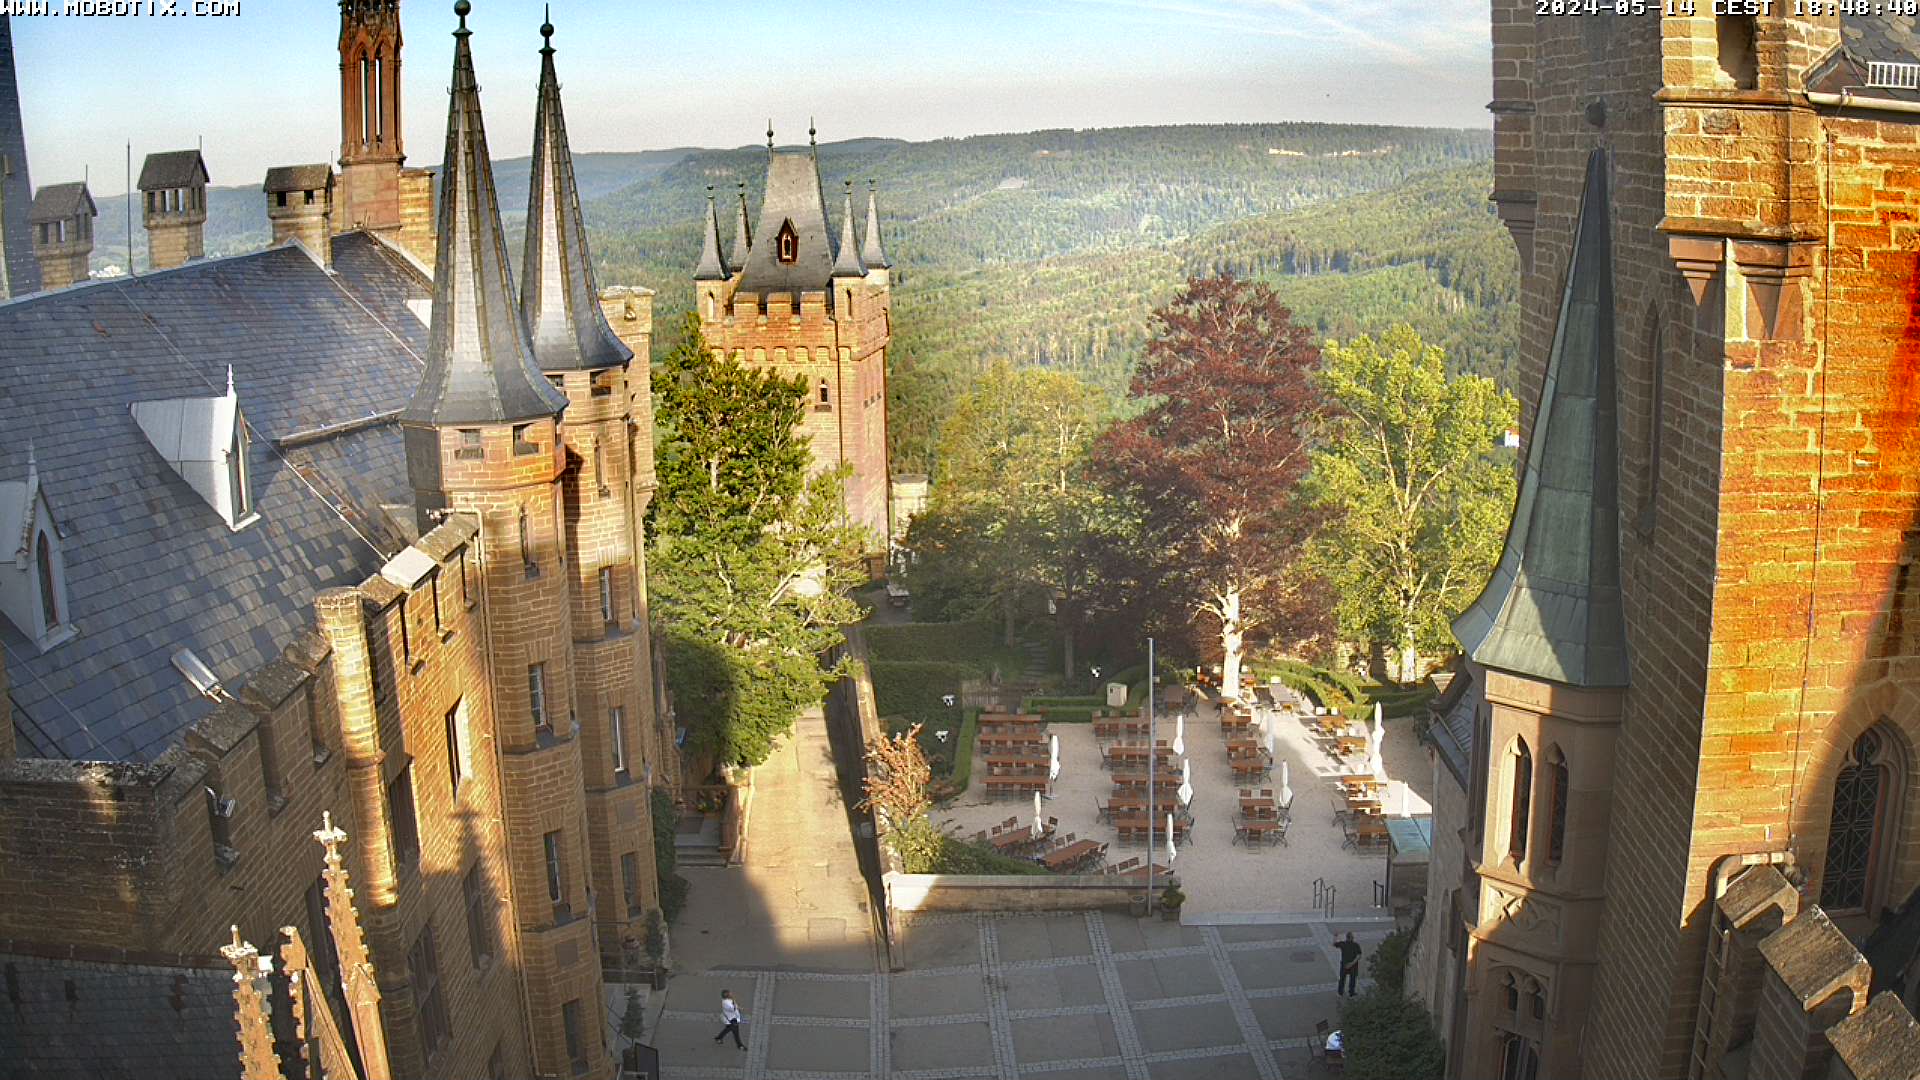 Burg Hohenzollern Thu. 18:50